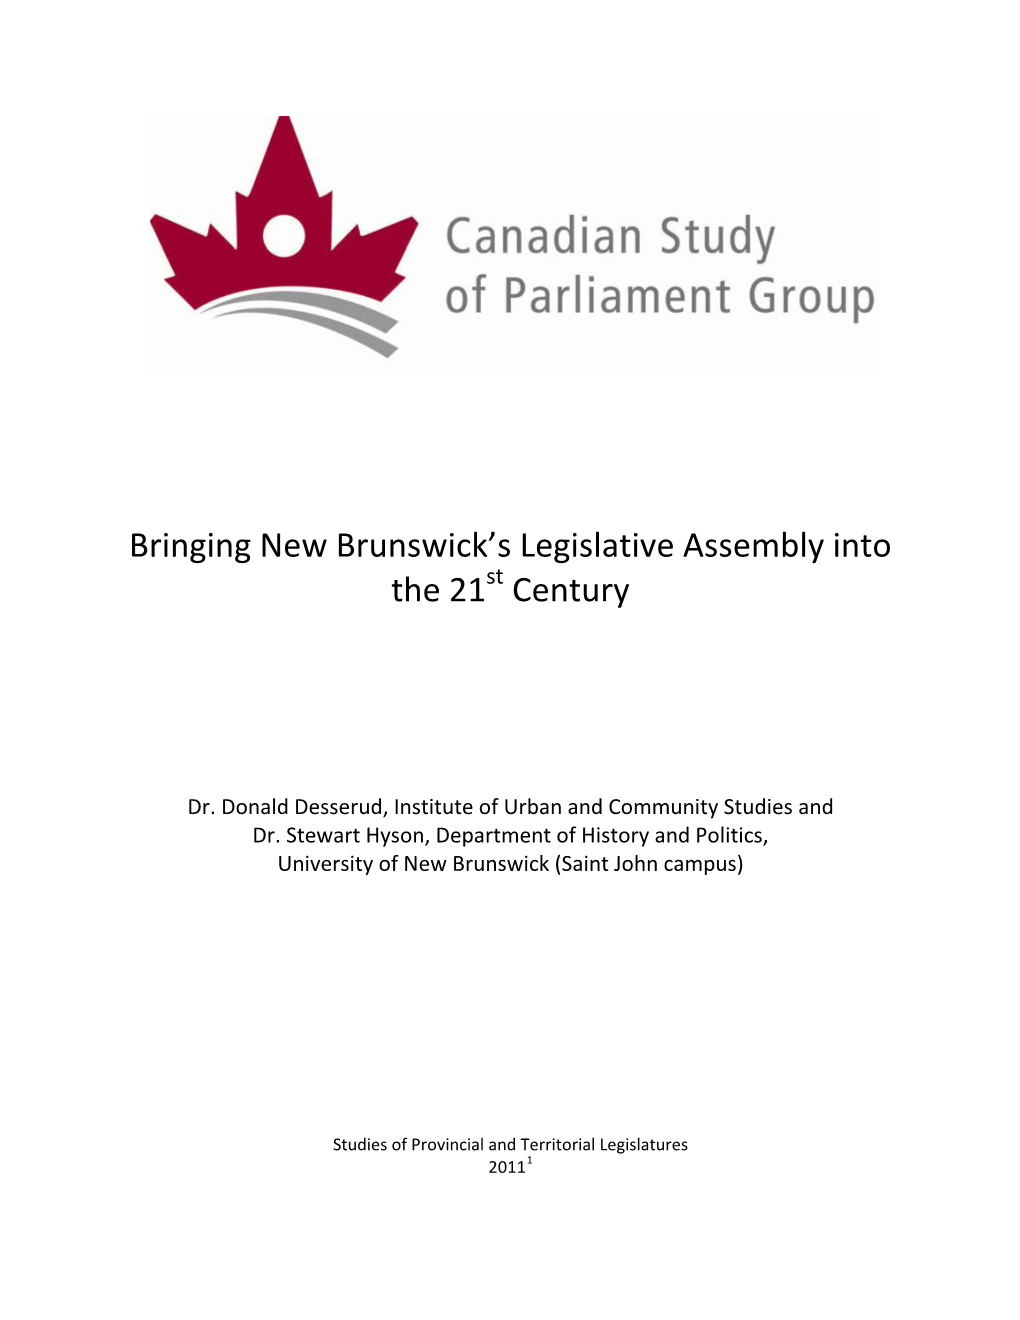 New Brunswick’S Legislative Assembly Into the 21St Century